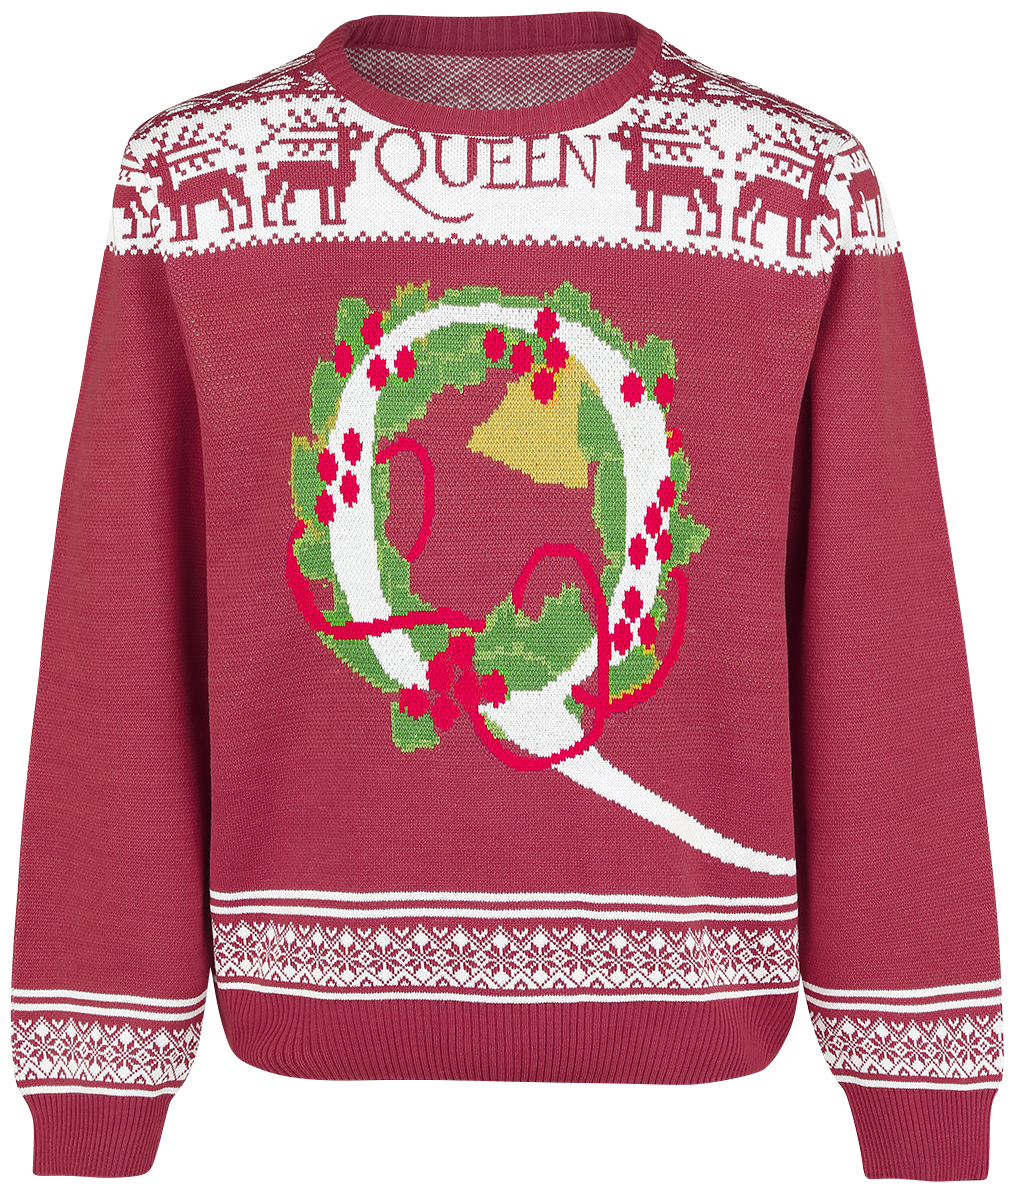 Queen - Holiday Sweater 2019 - Sweatshirt - multicolour image